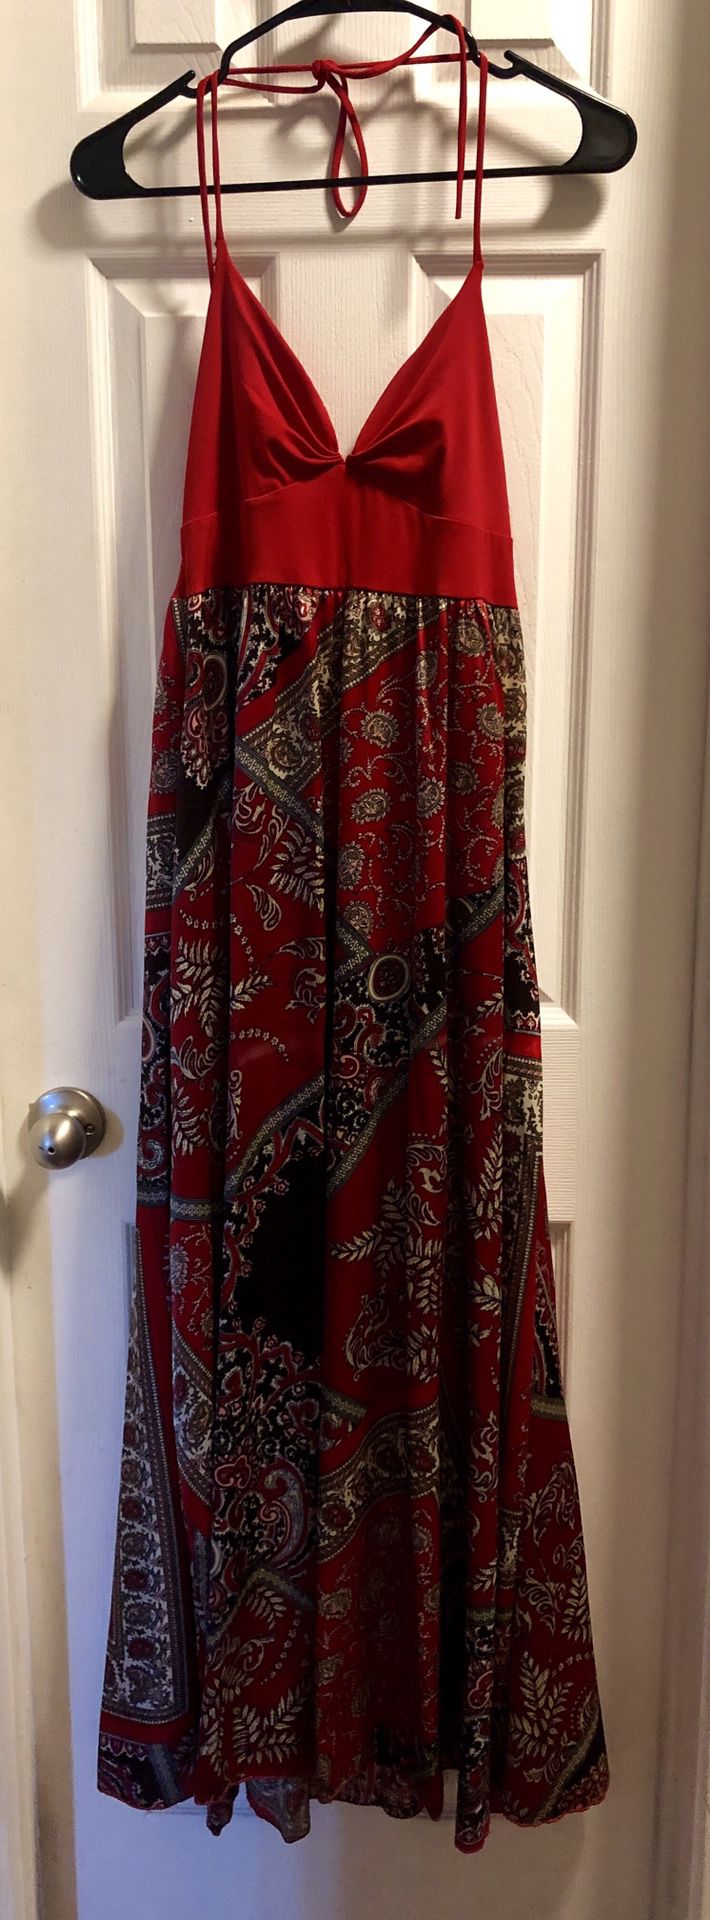 Red Satin Halter Dress - Size S